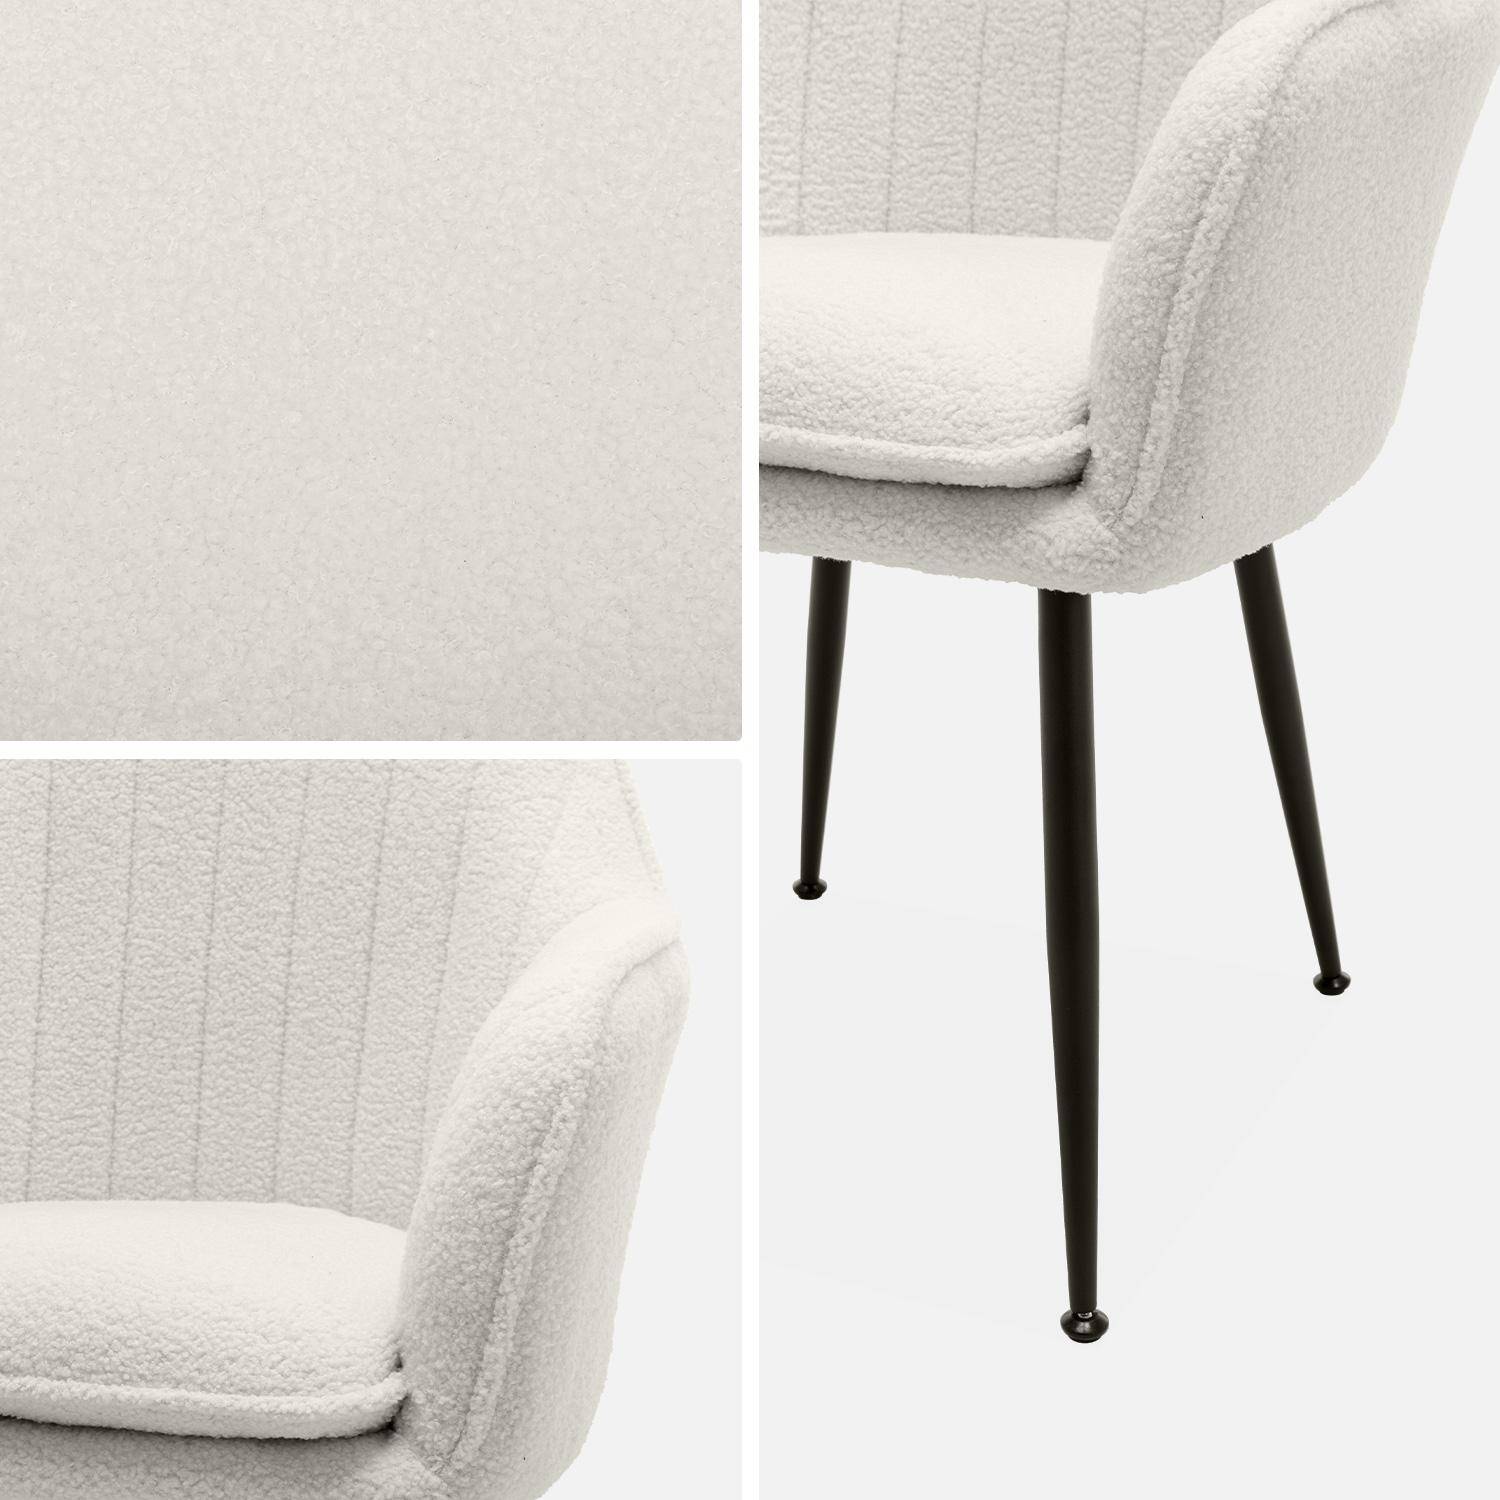 Set of 2 Boucle armchair with metal legs, 58x58x85cm - Shella Boucle - White,sweeek,Photo5